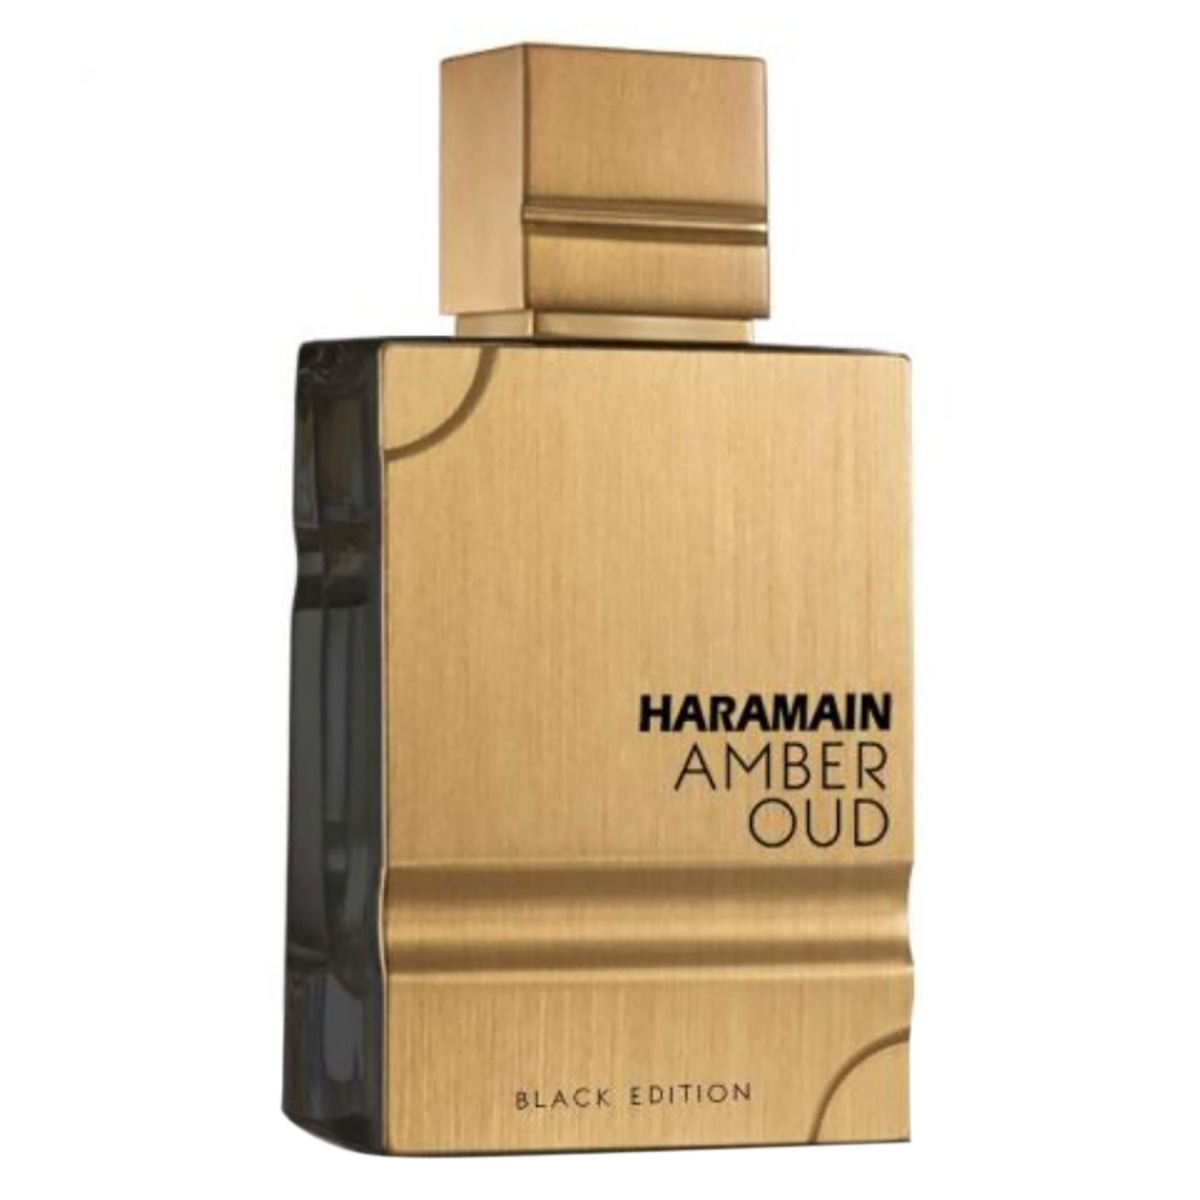 Al Haramain 459035 3.4 oz Al Haramain Amber Oud Eau De Parfum Spray for Unisex - Black Edition - image 1 of 2